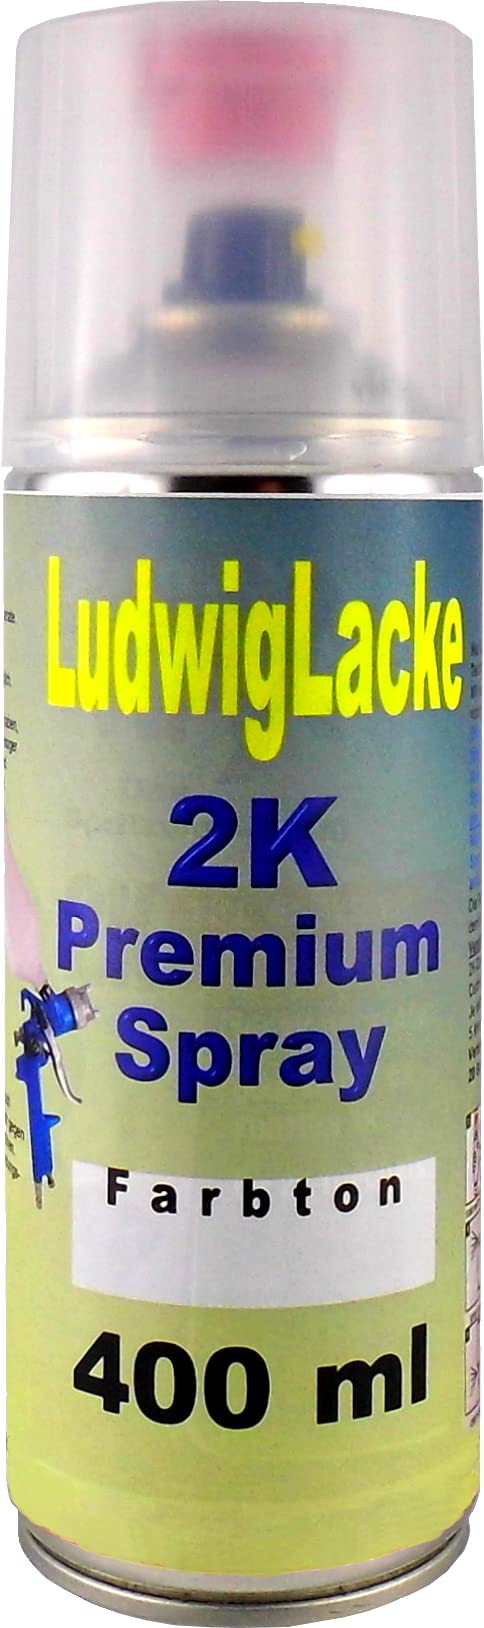 RAL 7015 SCHIEFERGRAU 2K Premium Spray SEIDENMATT 400ml von Ludwiglacke